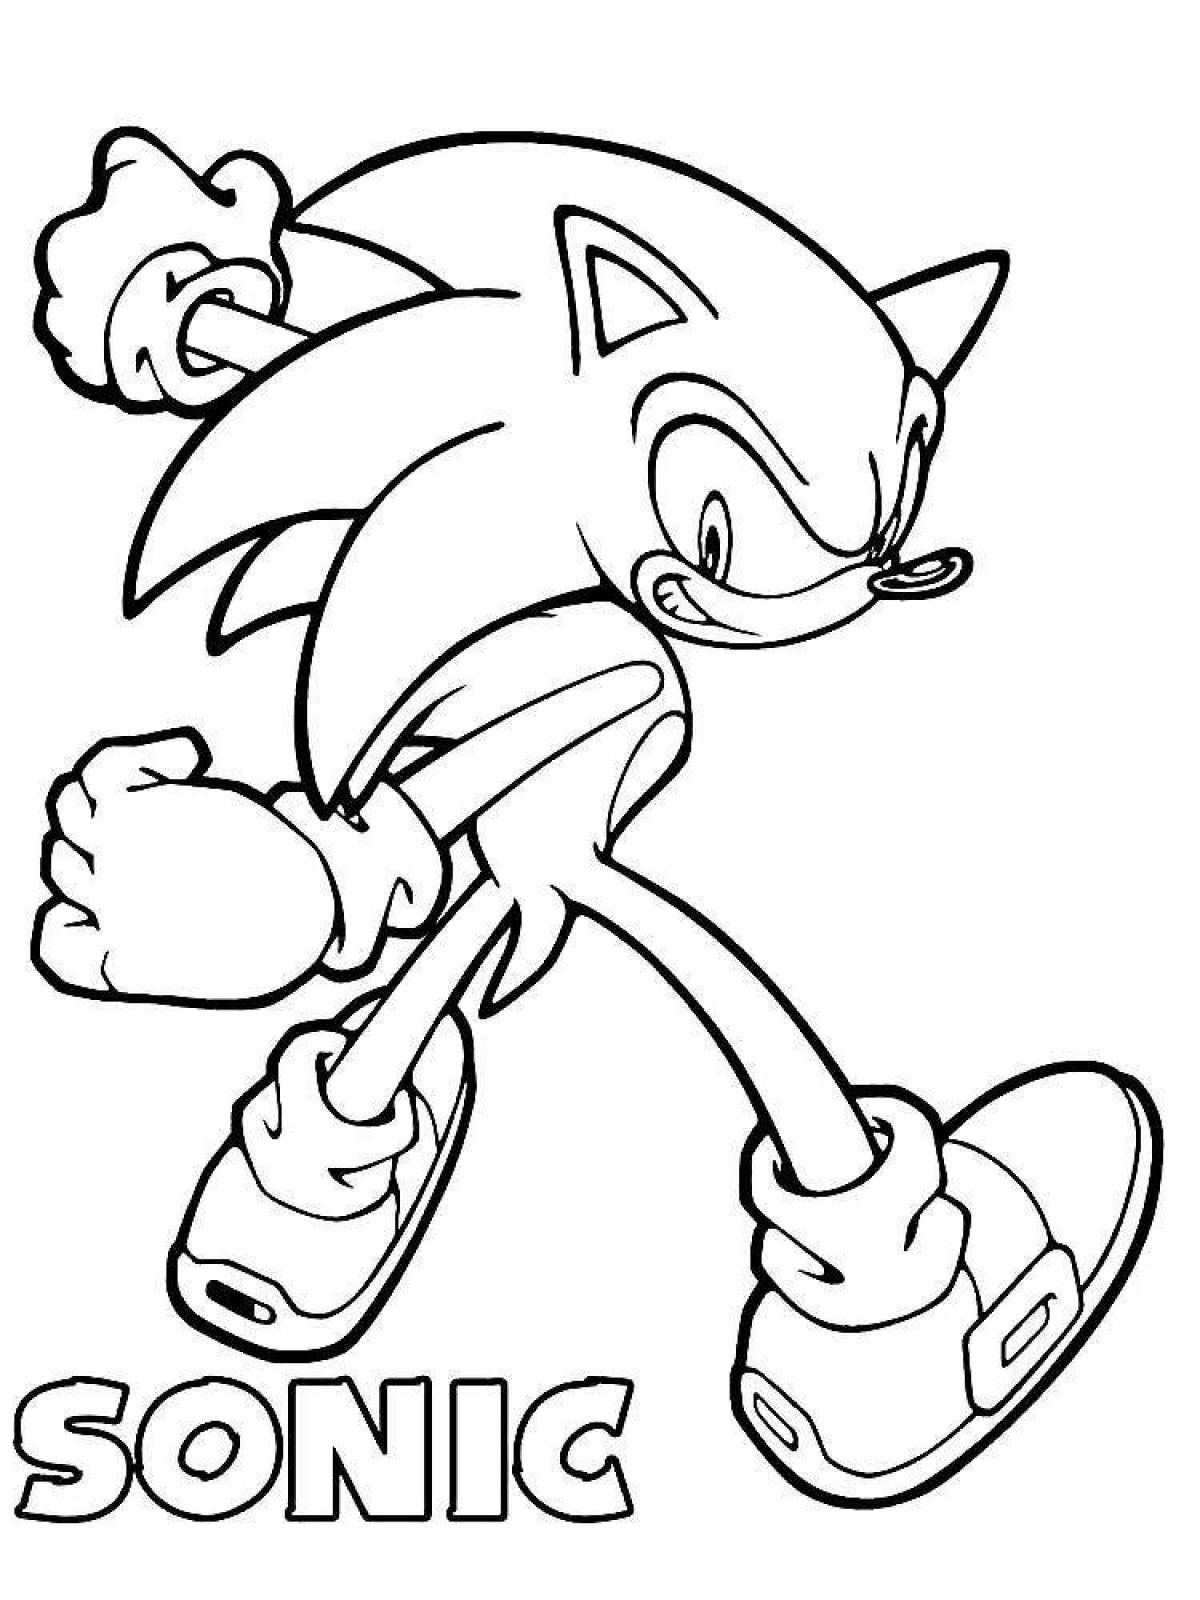 Sonic prime bright coloring